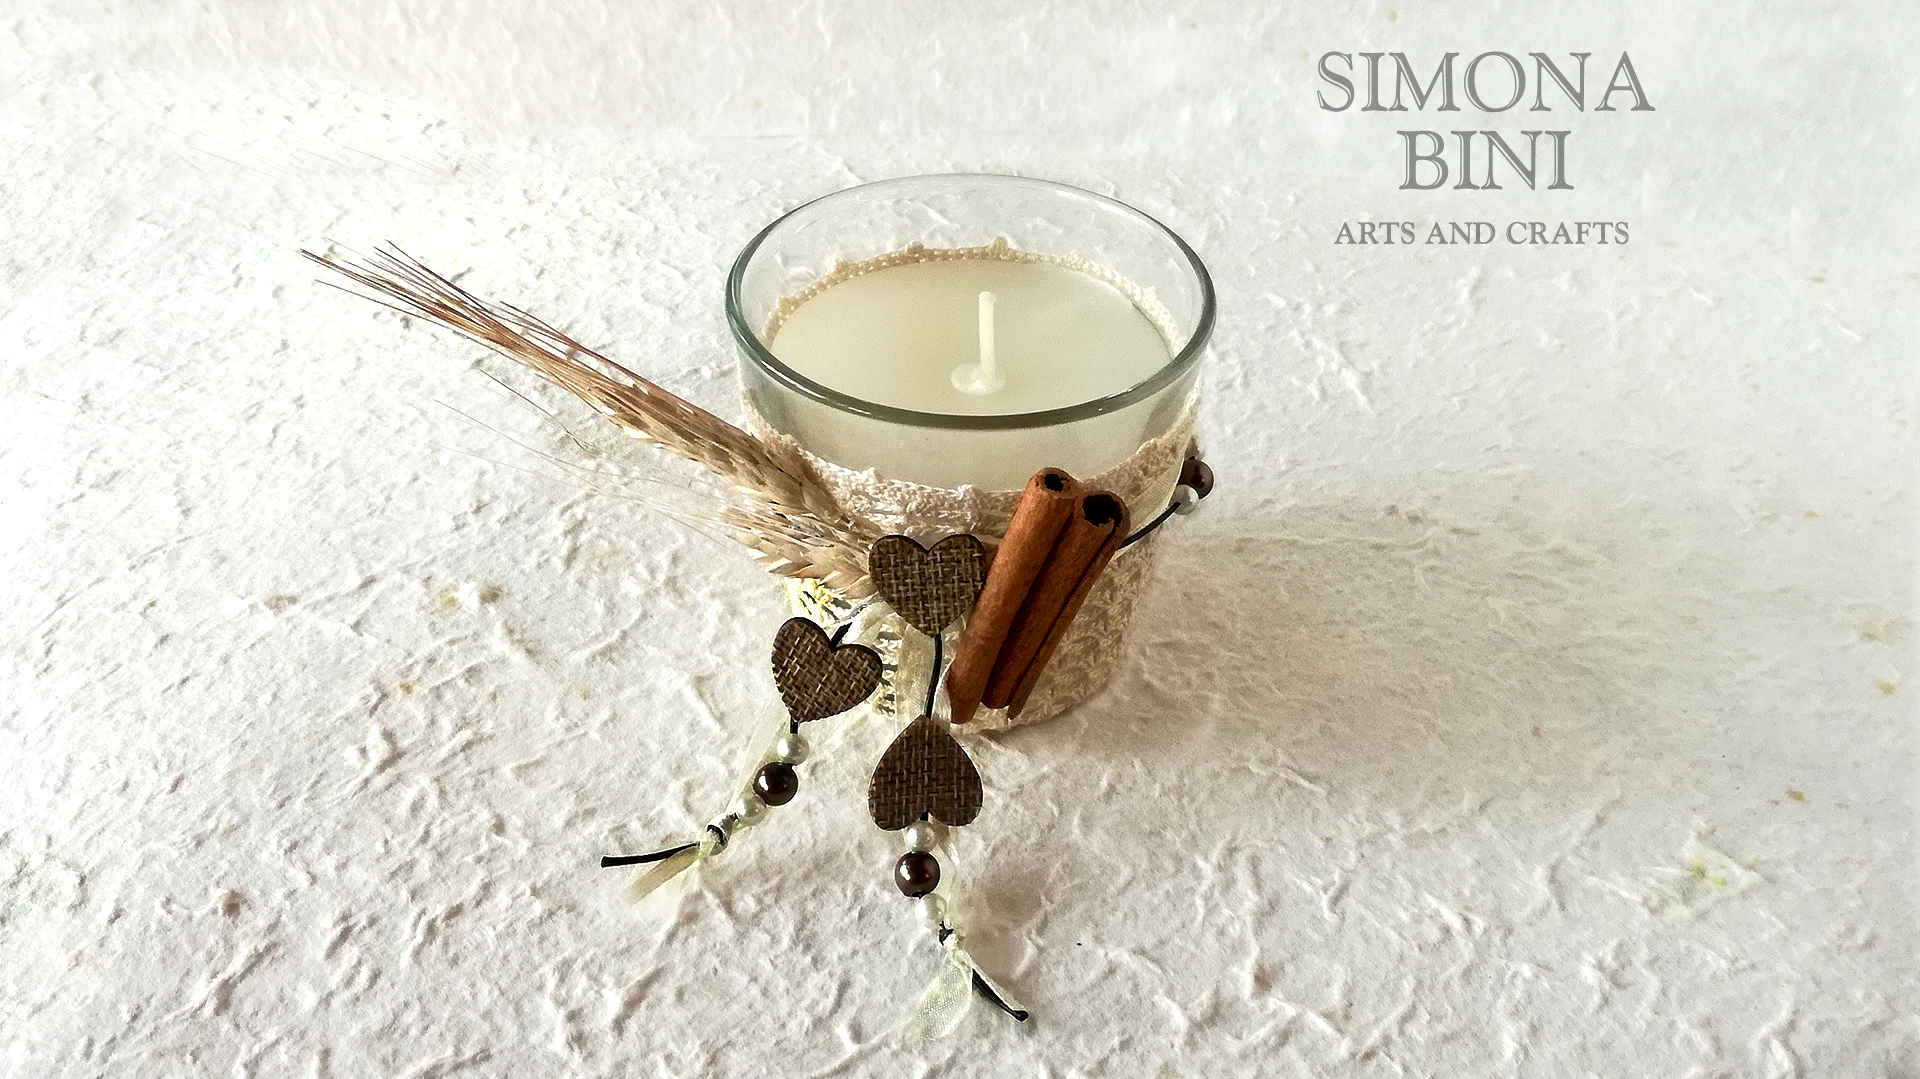 Candela con spighe e cannella – Candle with ears and cinnamon – Simona Bini